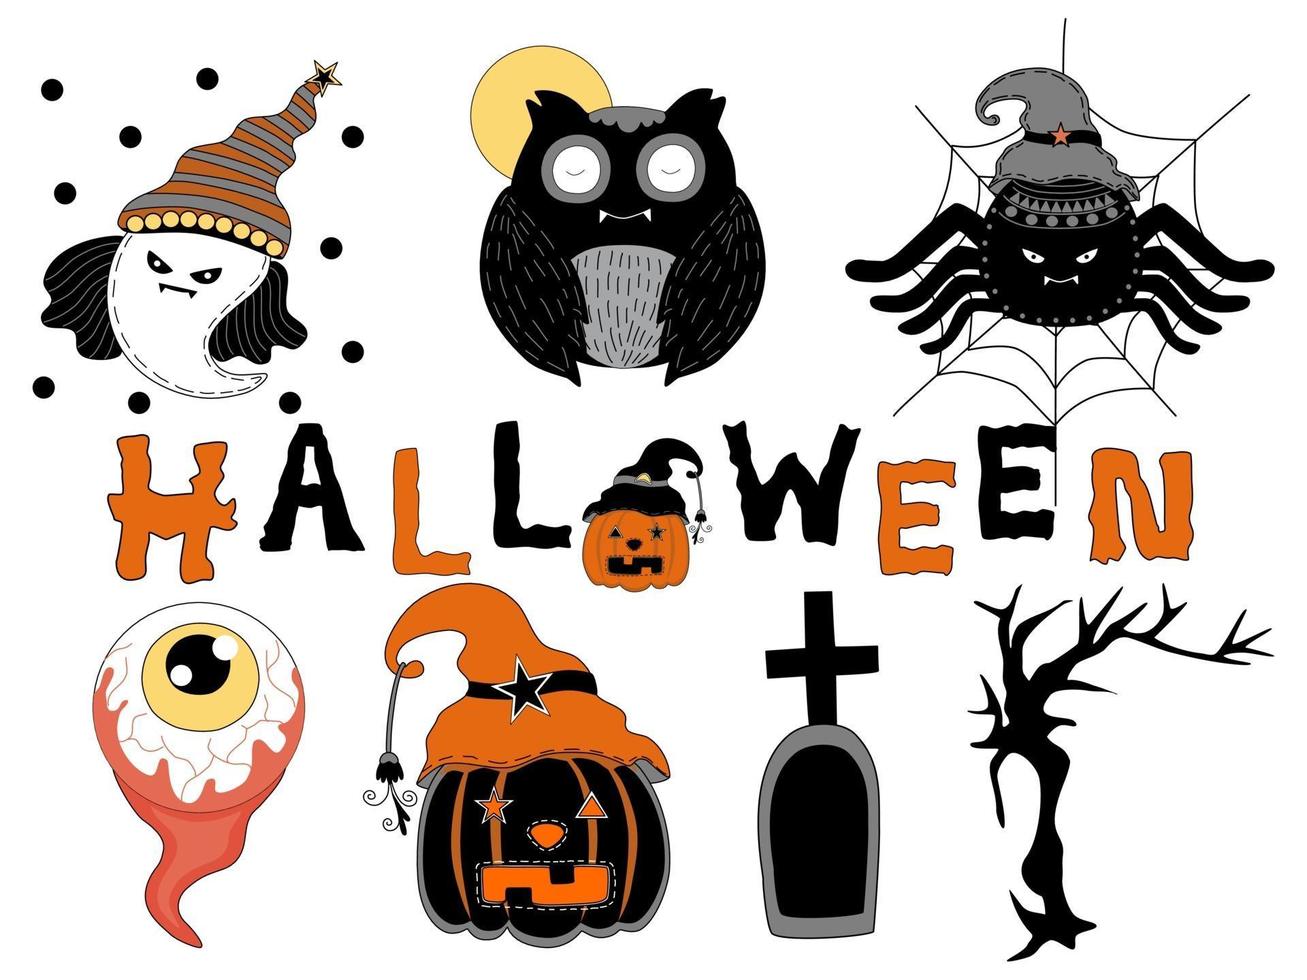 Happy Halloween-Kollektion im Doodle-Stil gestaltet vektor